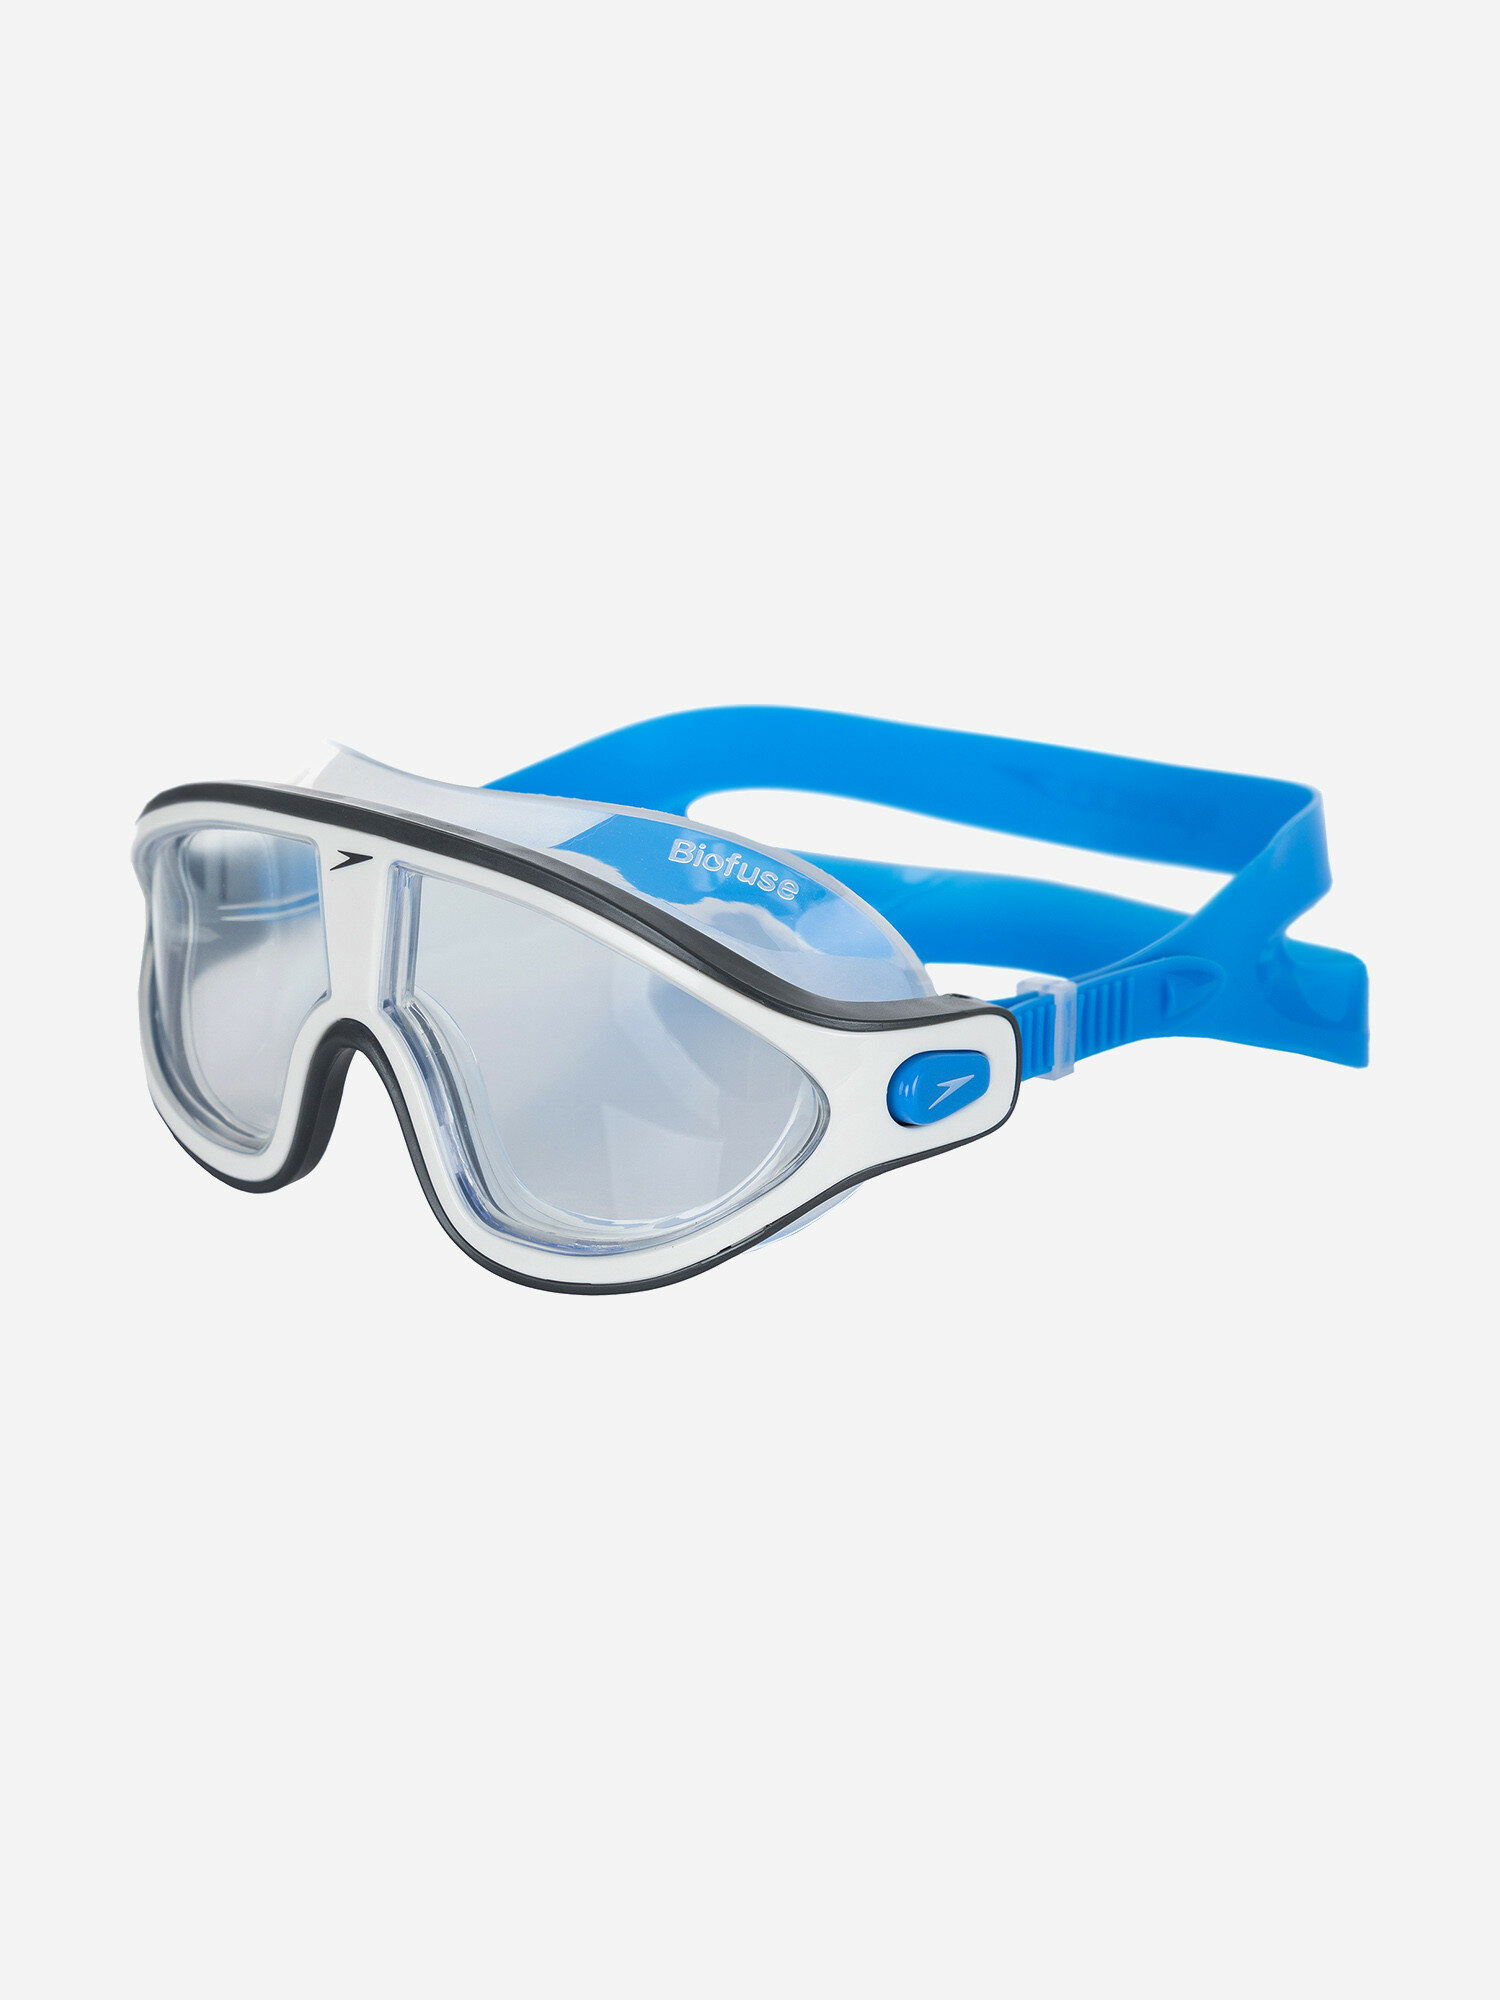 Очки-маска для плавания Speedo Biofuse Rift, прозрачно-голубой